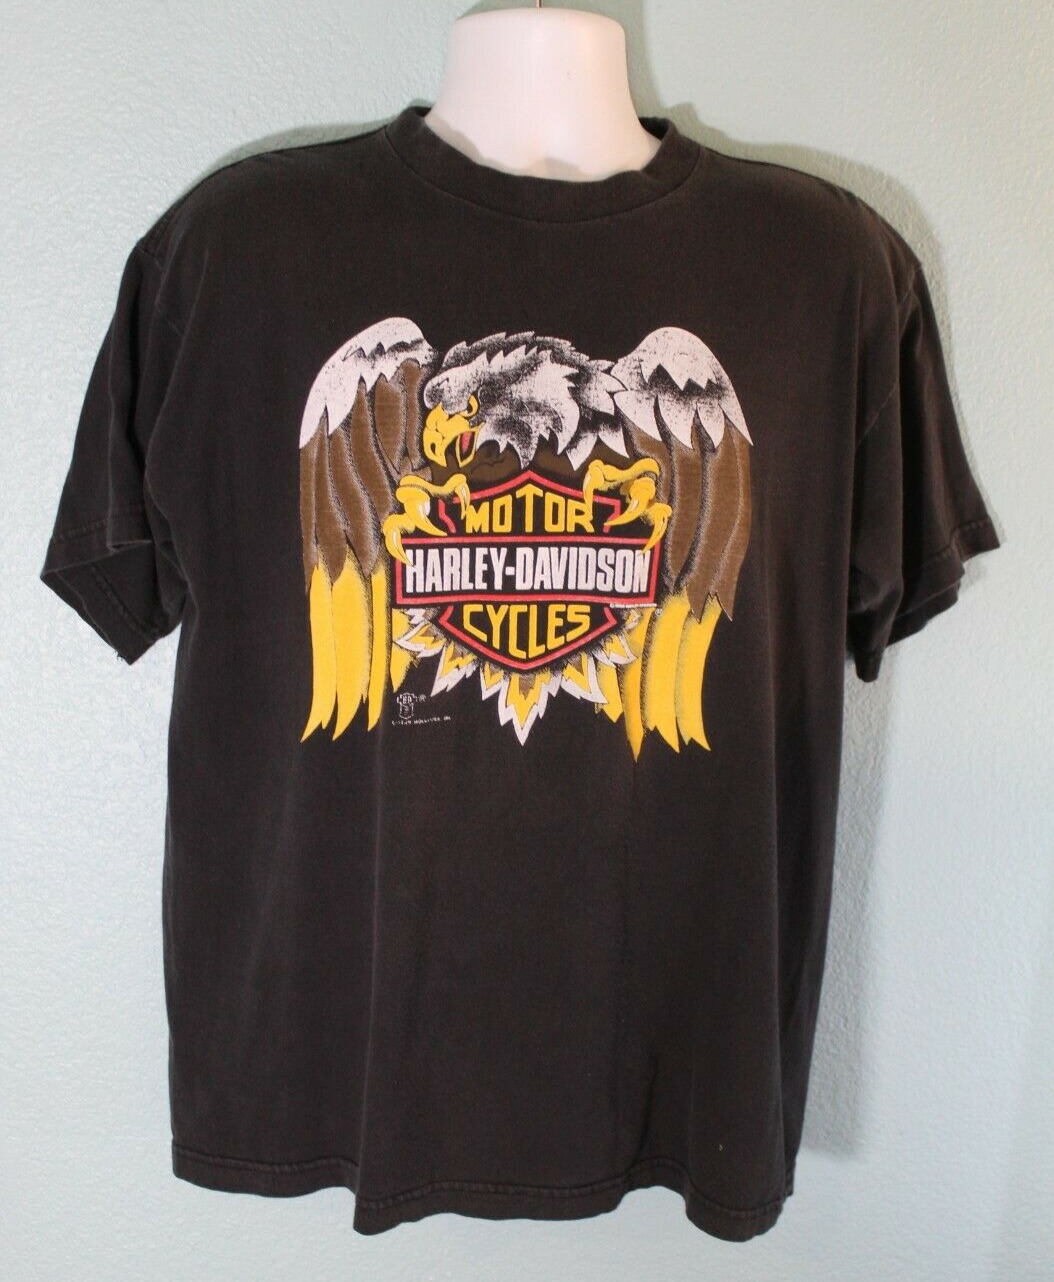 Vintage 1982 Harley-Davidson Motor Cycles Adult Large Tee Shirt Black Eagle